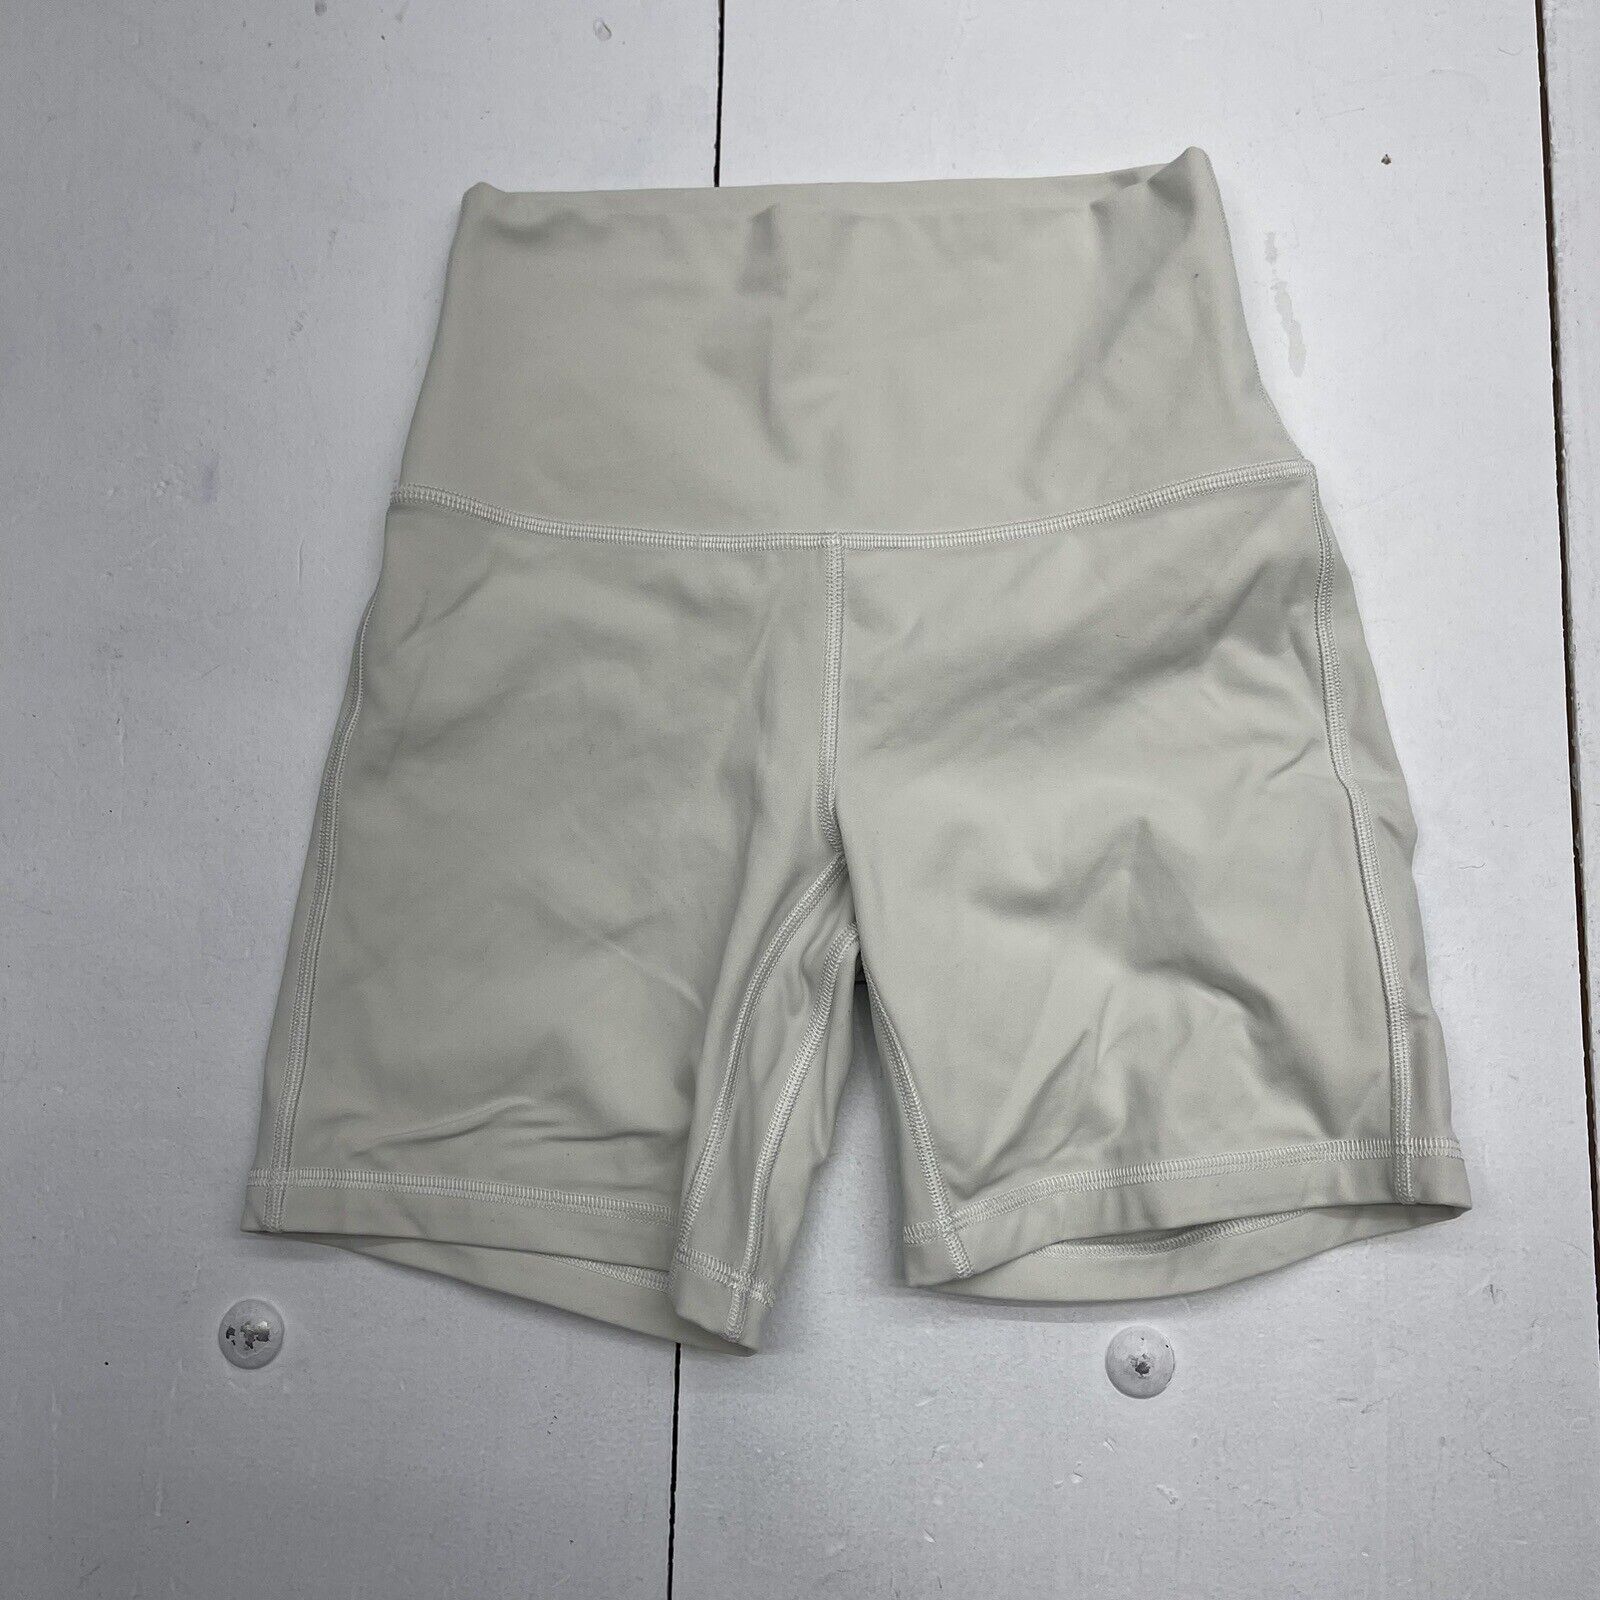 LULULEMON Align high-rise shorts - 6